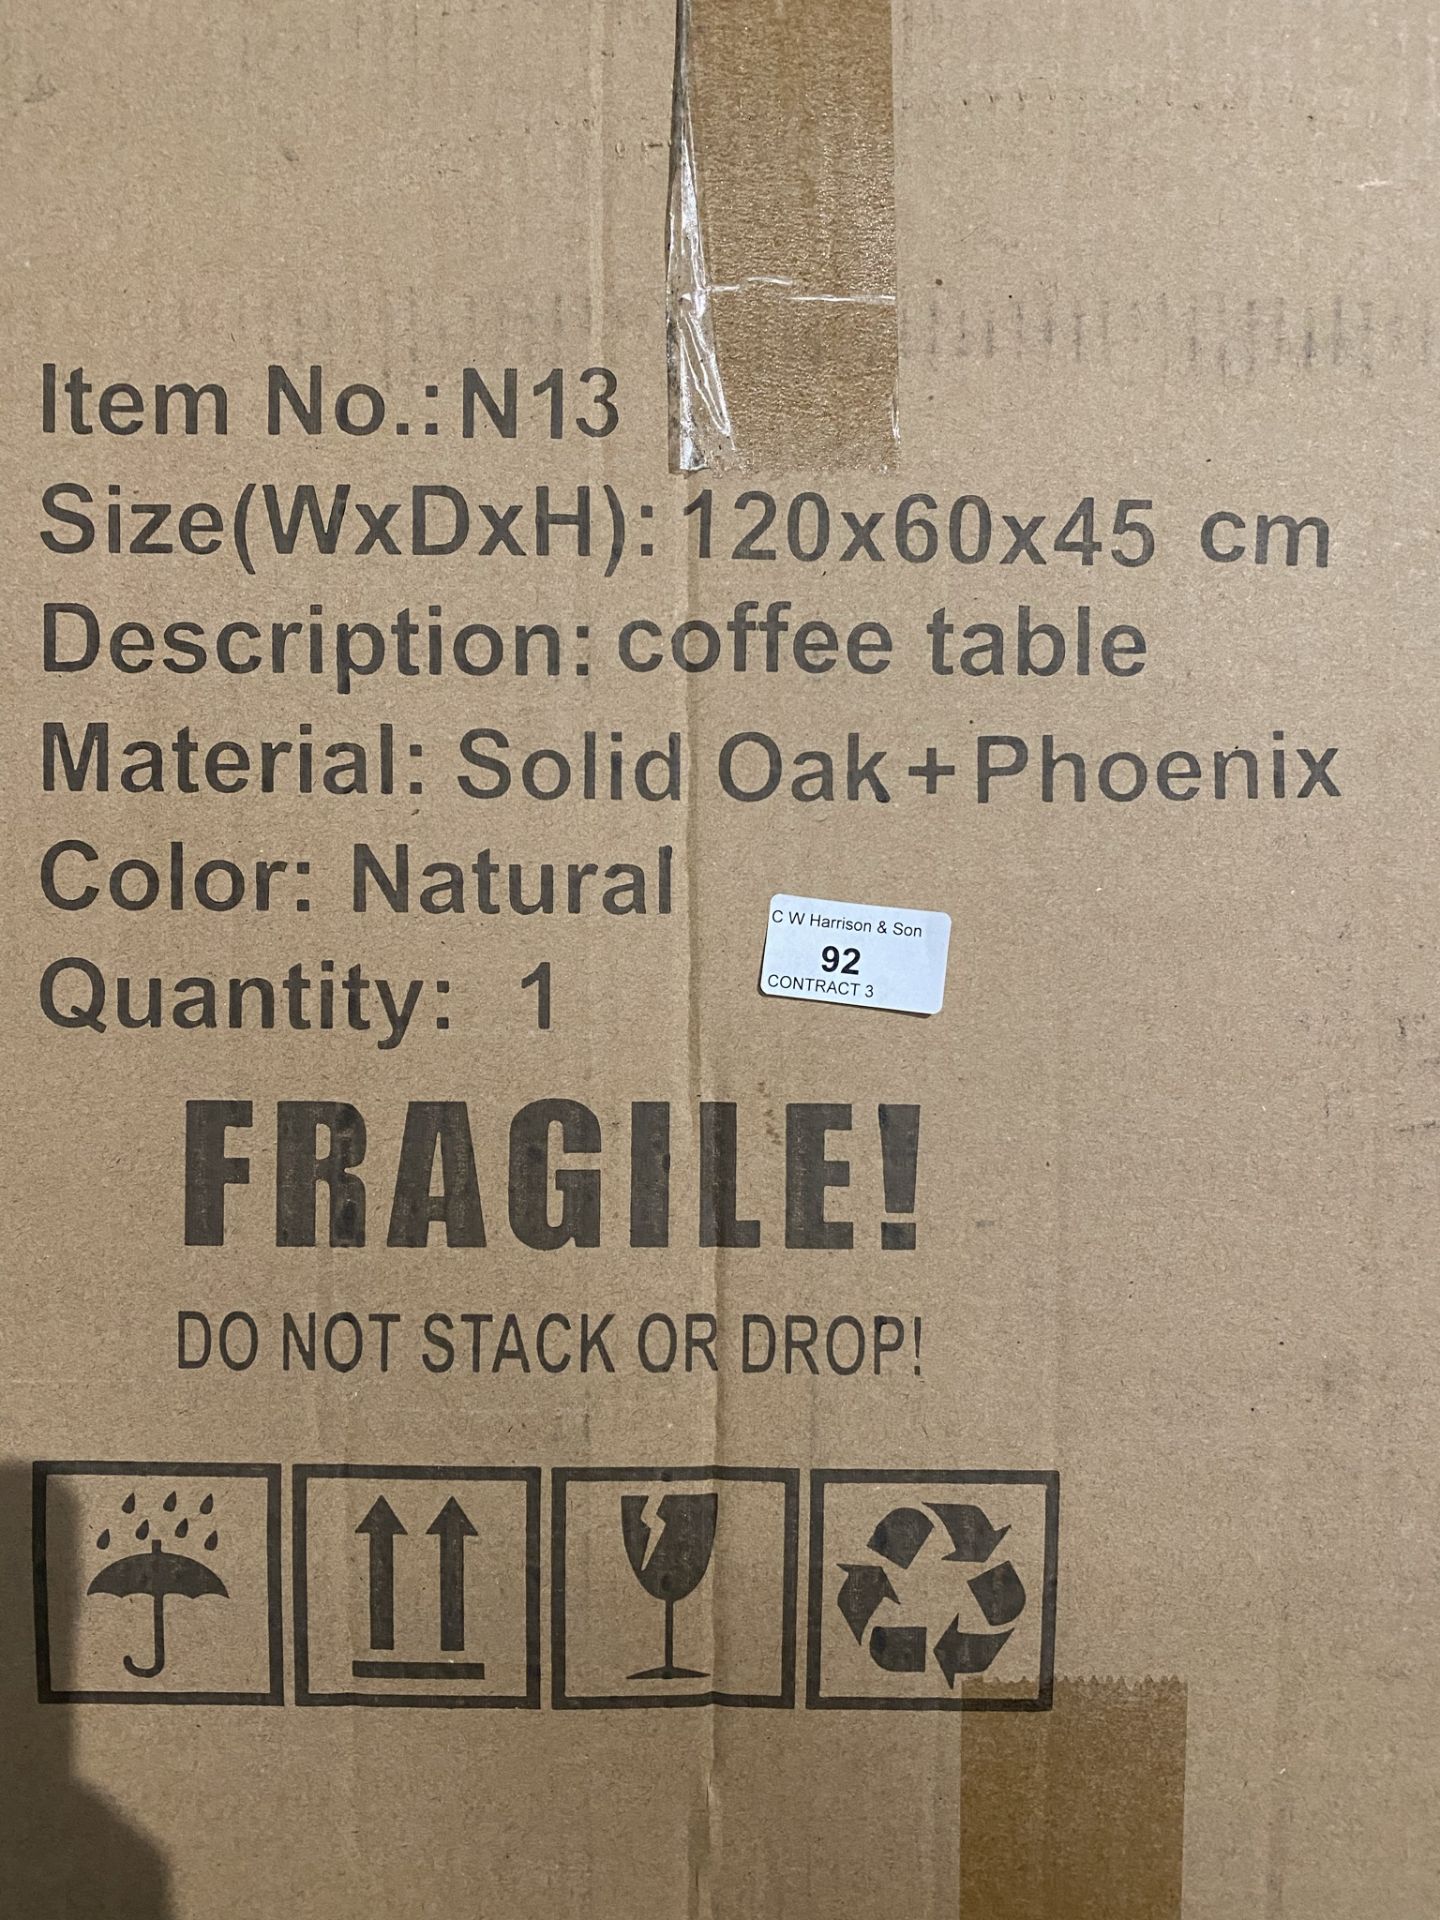 An Solid Oak + Phoenix 4 drawer coffee table - 120cm x 60cm x 45 cm - Image 10 of 10